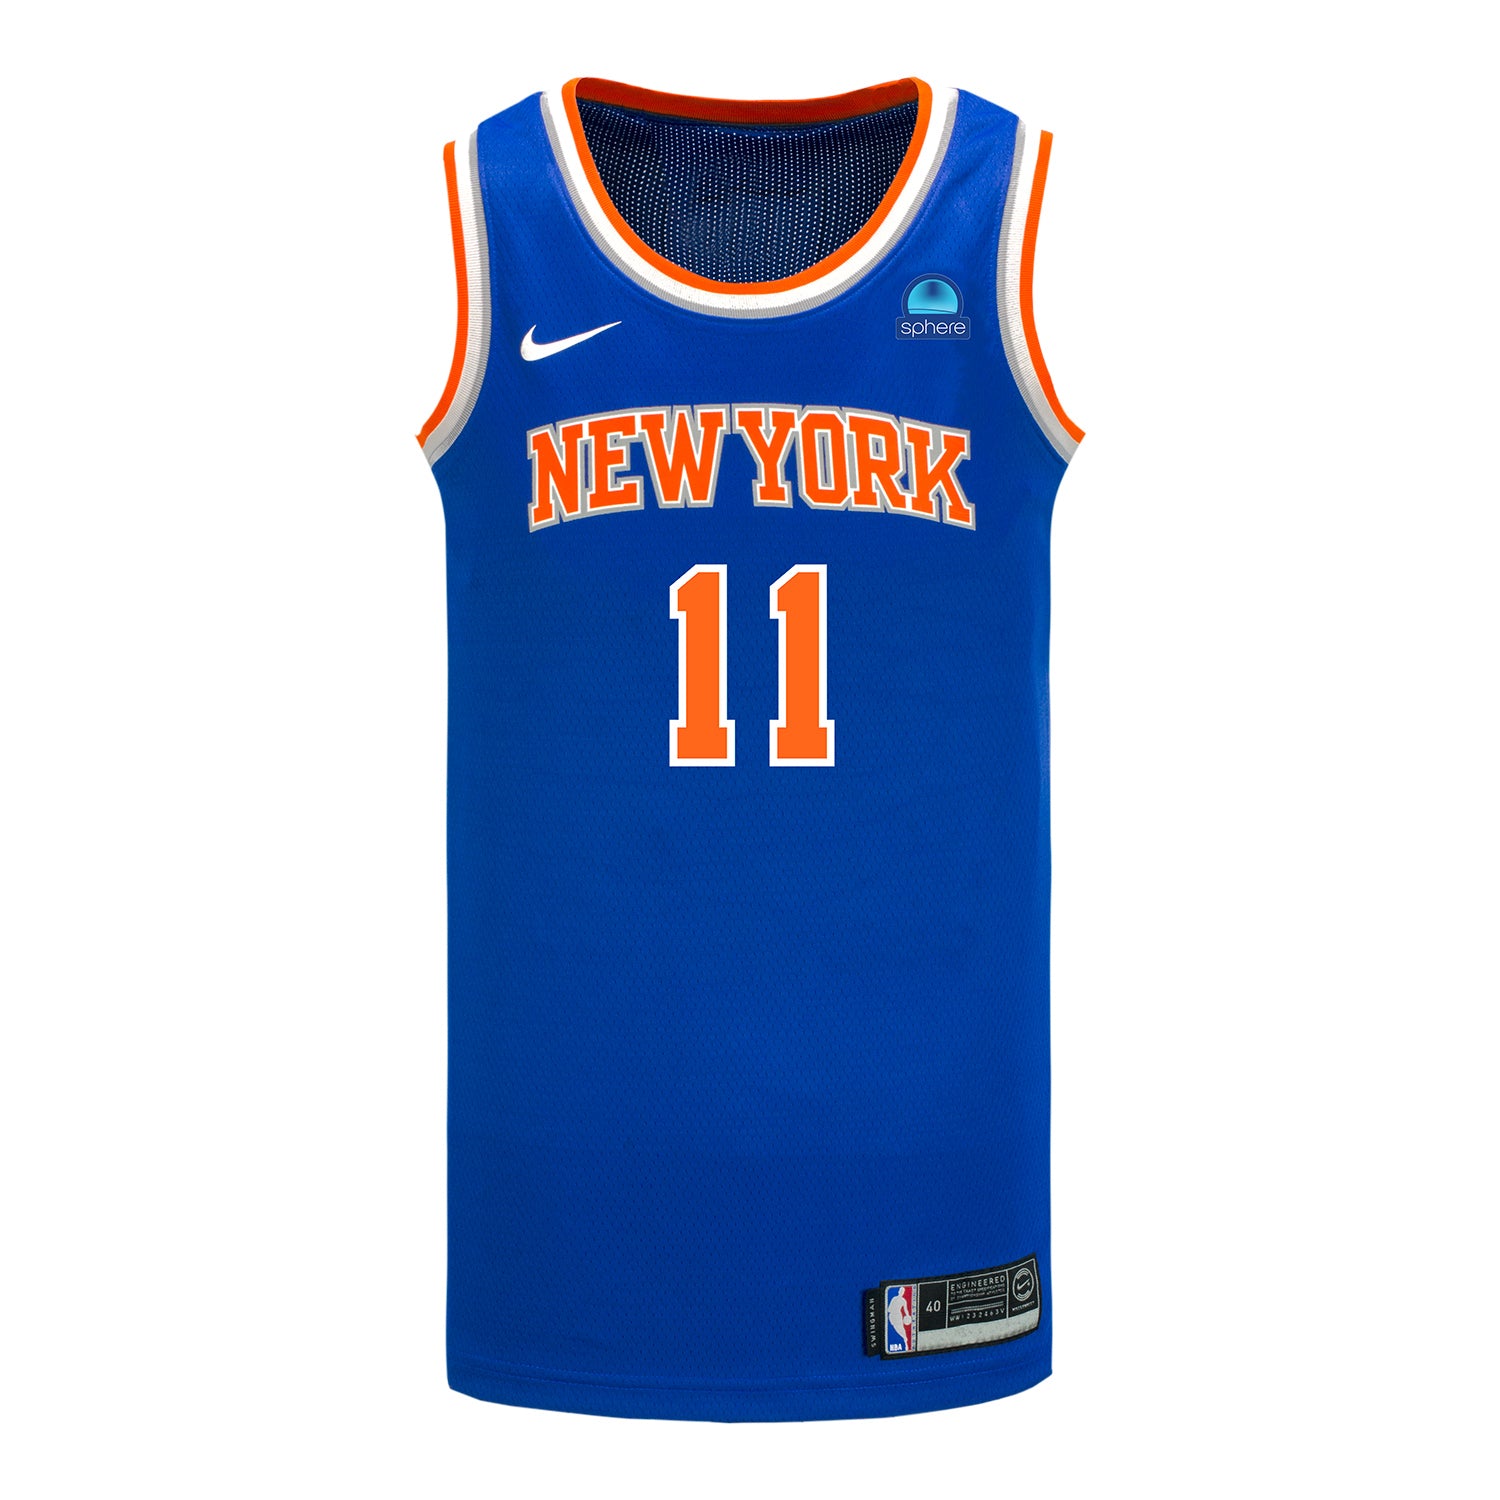 new york nba jersey authentic vs replica,